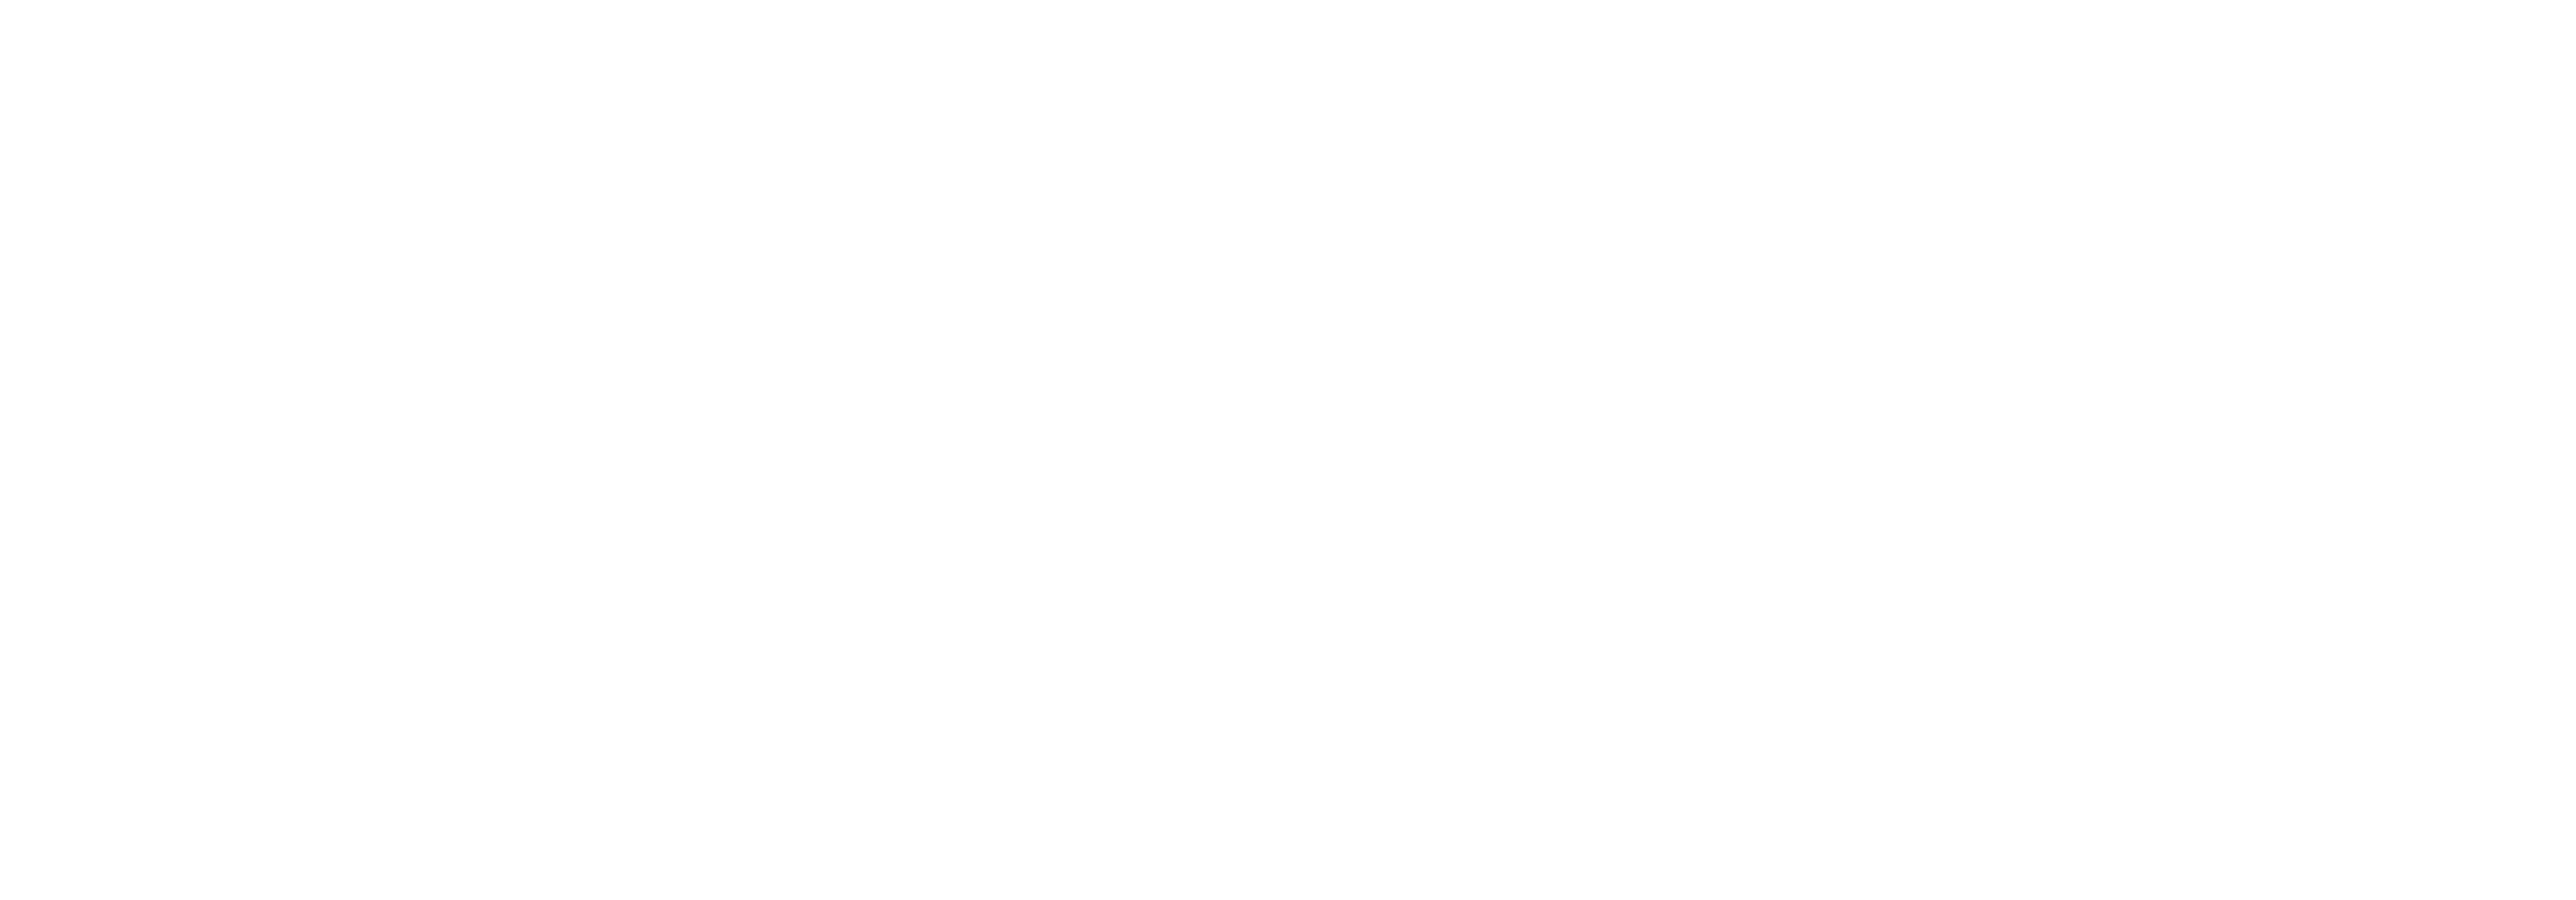 Beach Pro Tour volleyballworld